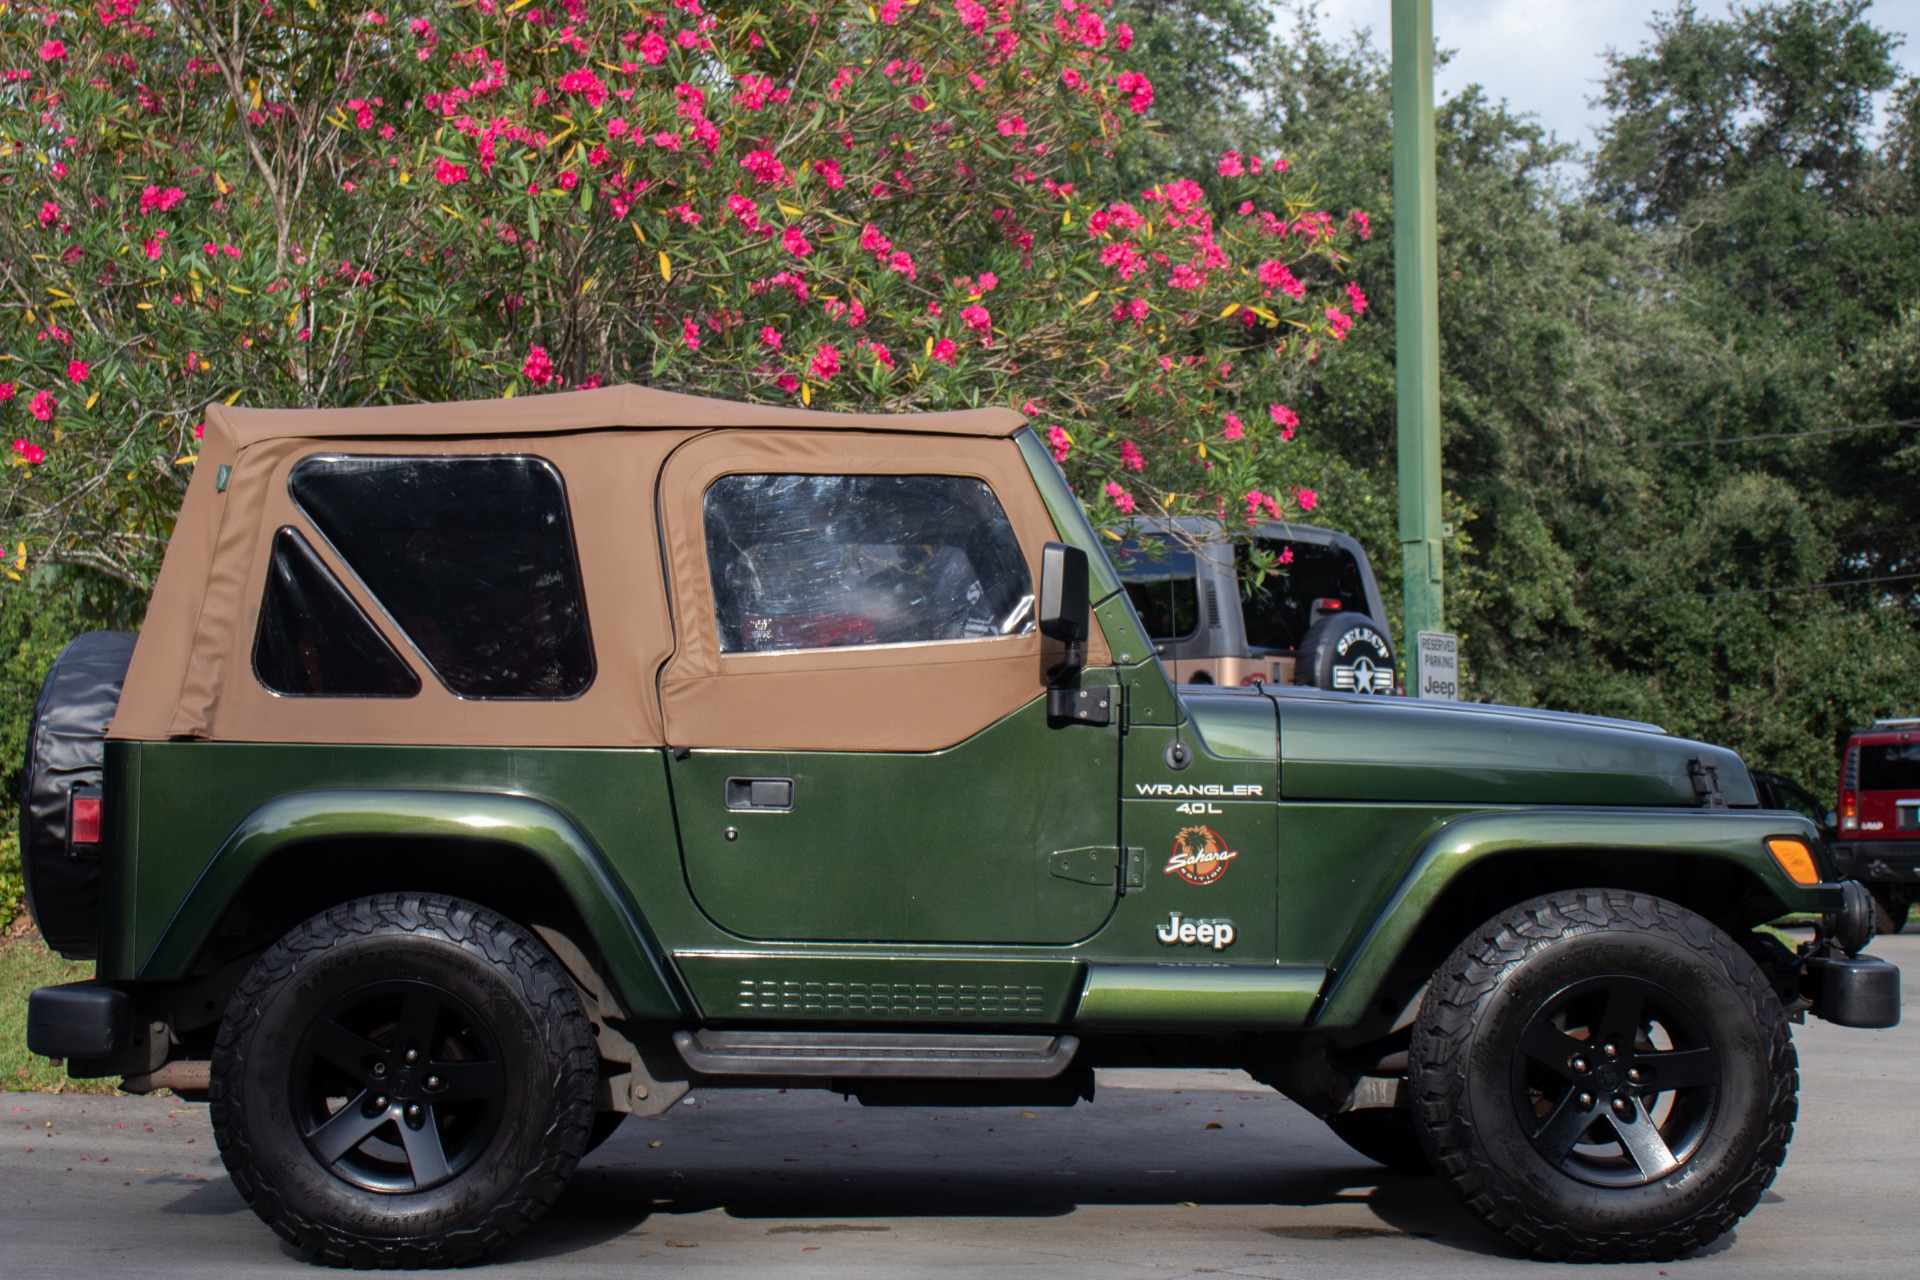 Used 1998 Jeep Wrangler Sahara For Sale ($13,995) | Select Jeeps Inc. Stock  #734717